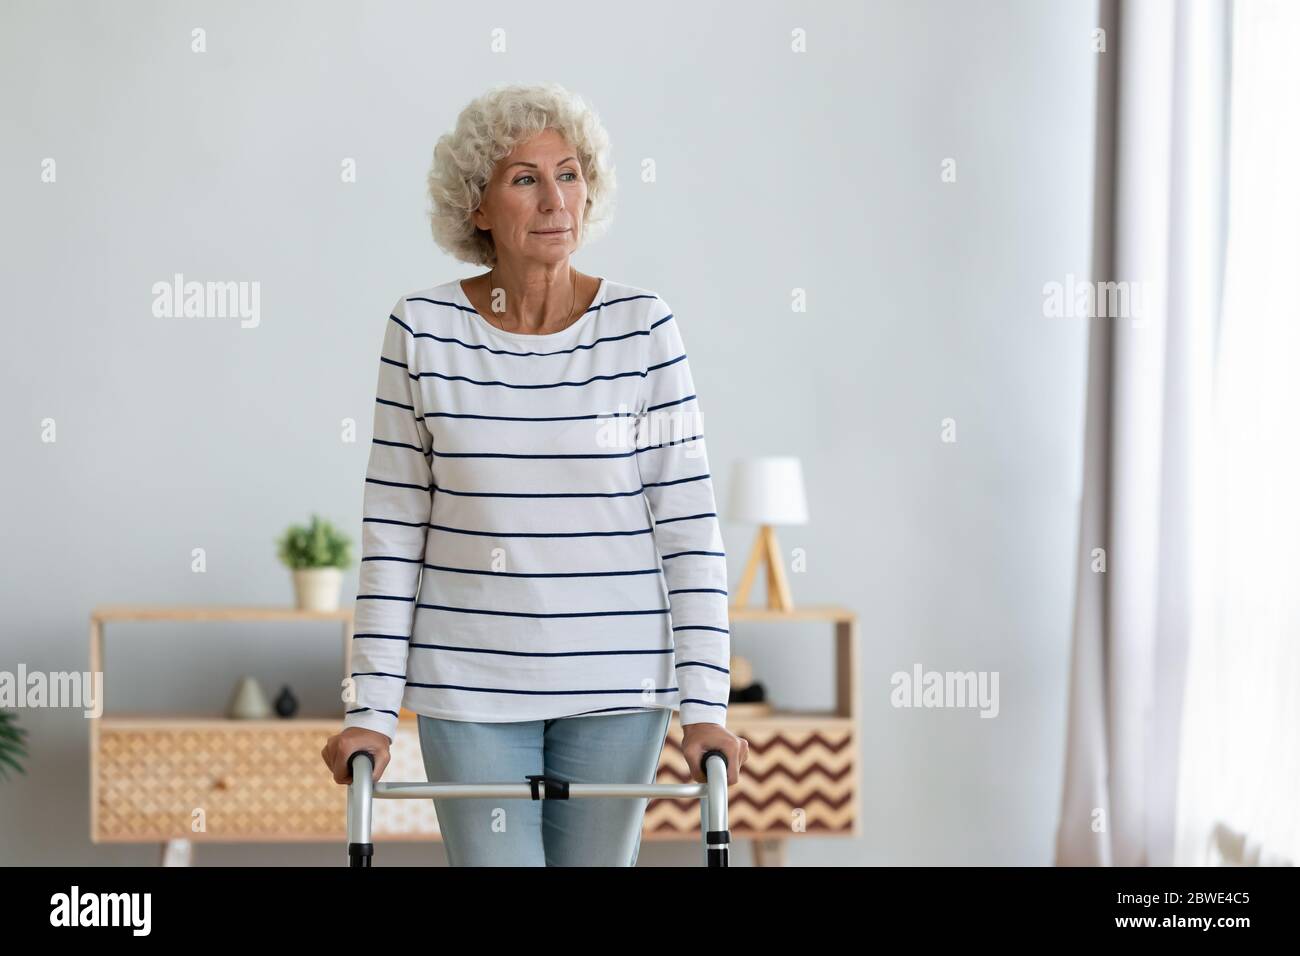 Elderly woman standing in living room holding walking frame Stock Photo